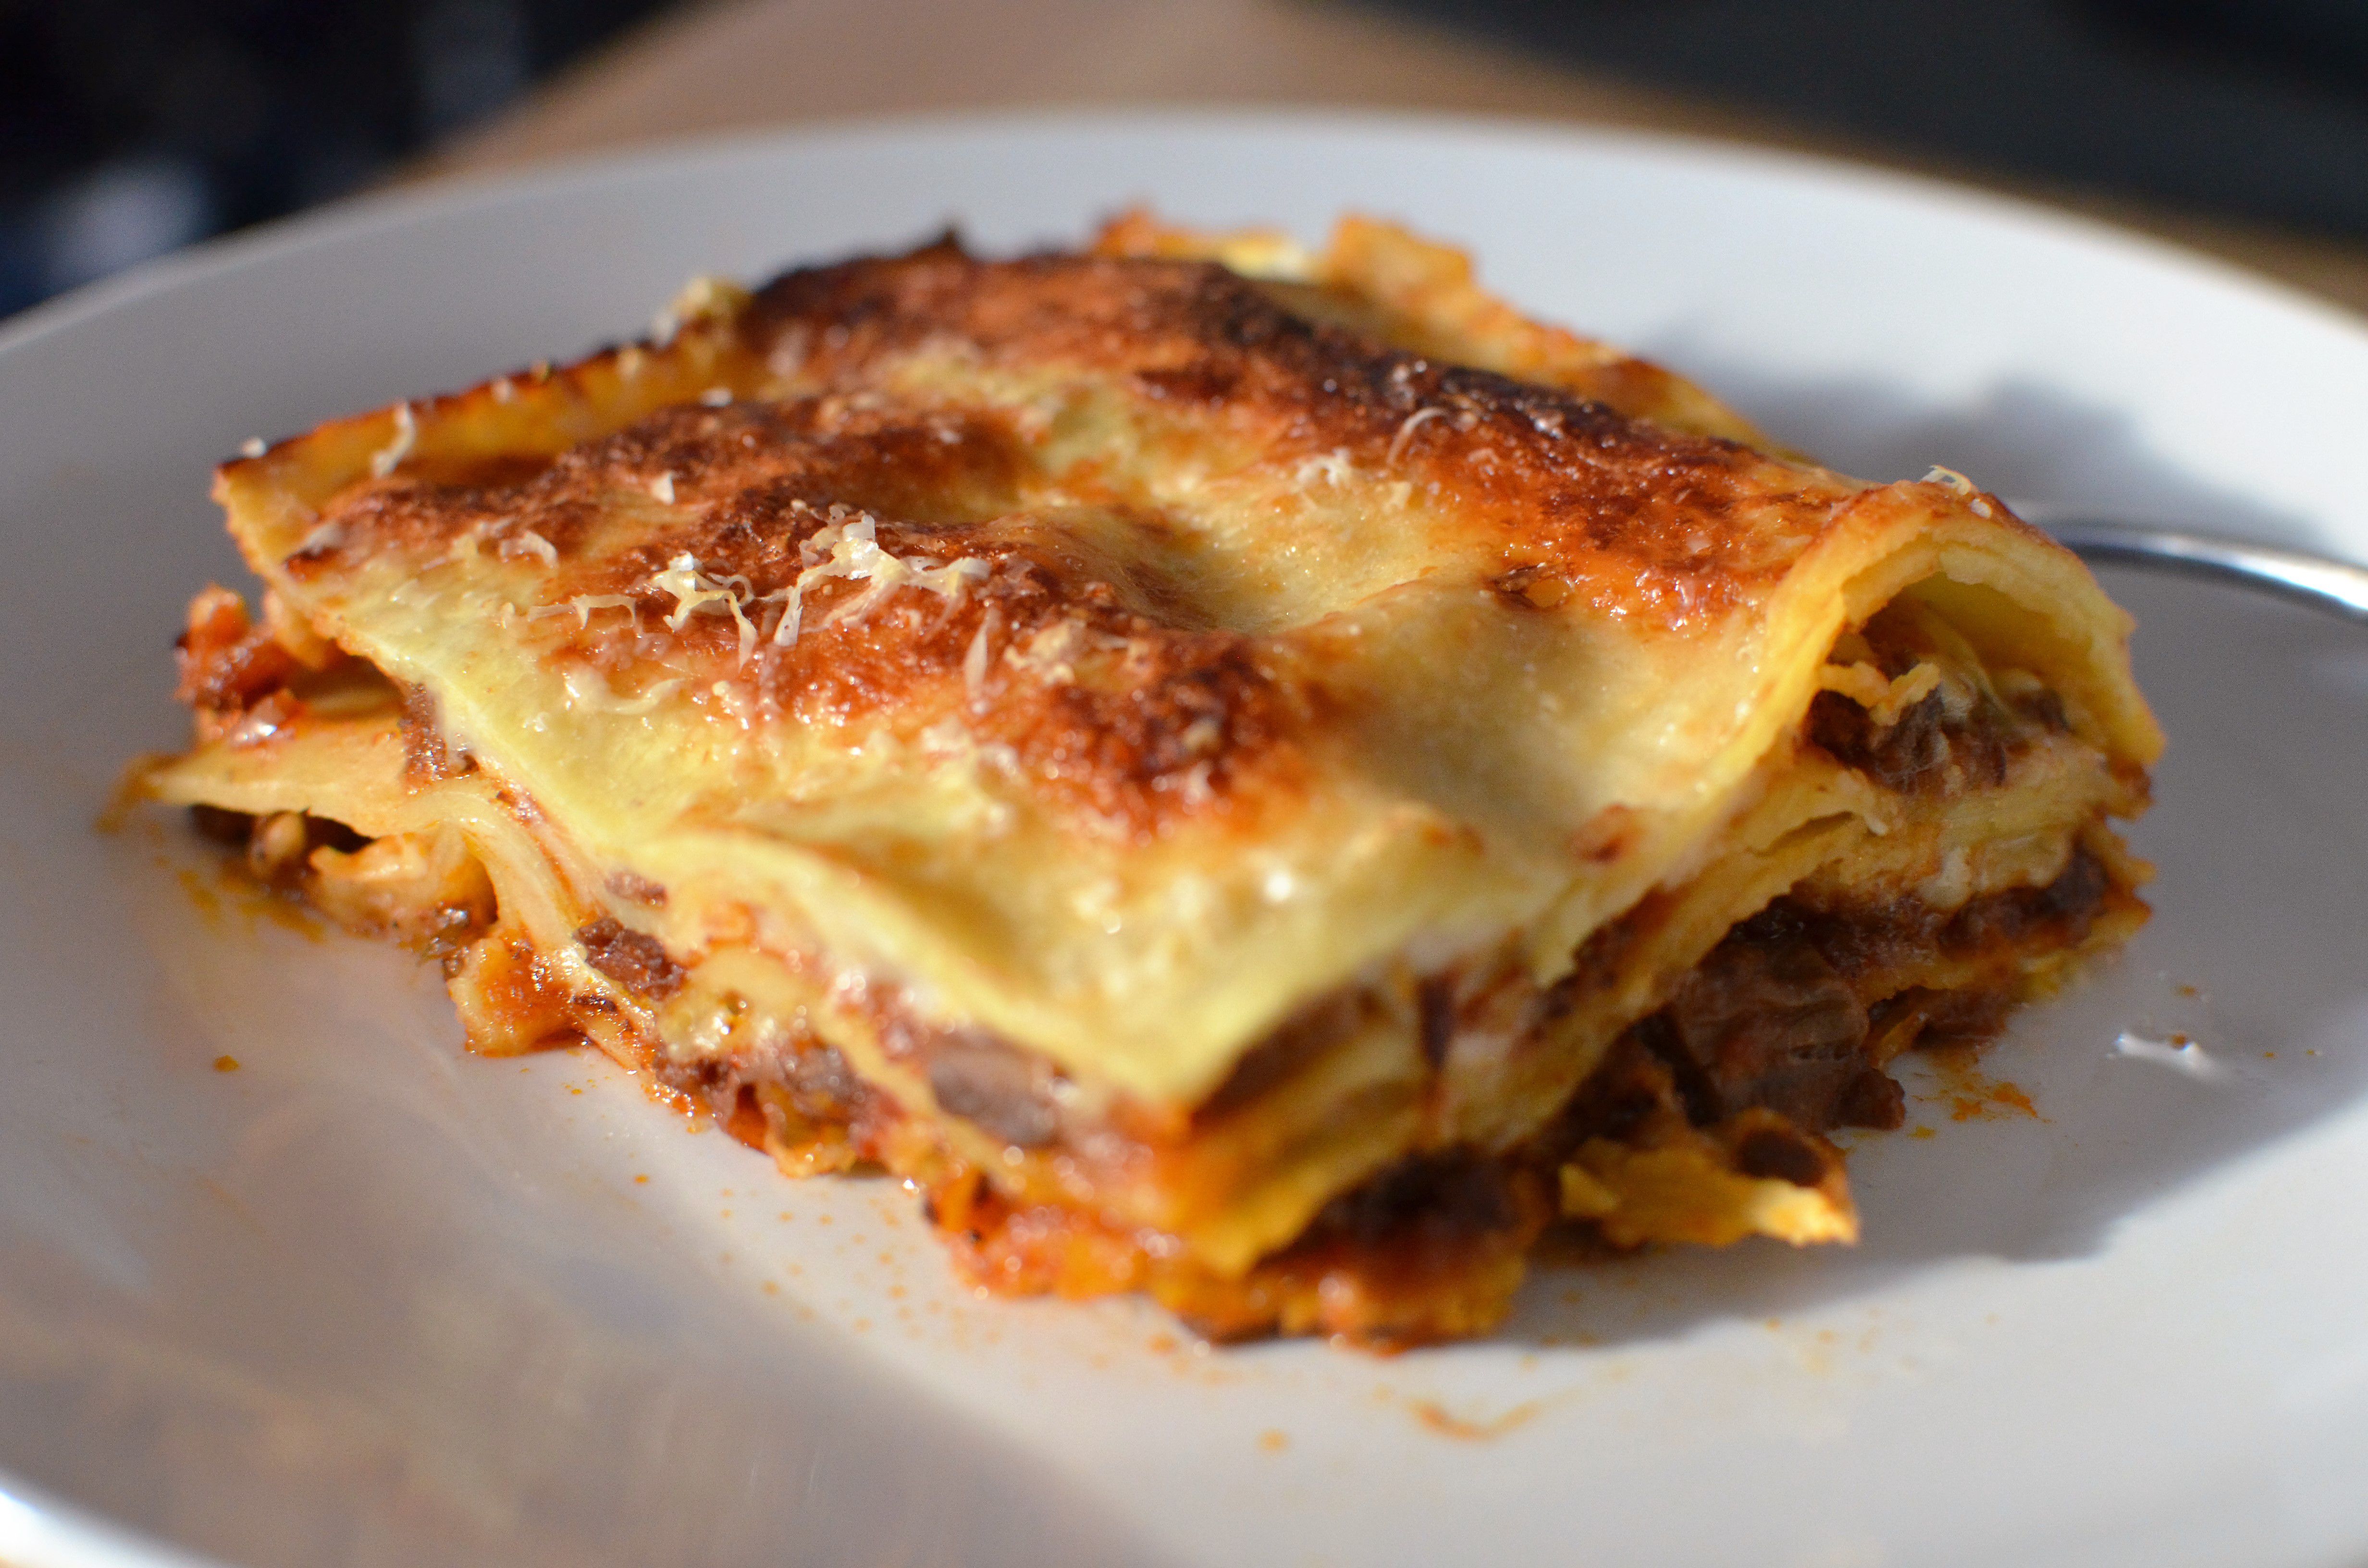 Lasagne alla Bolognese: A Classic, Hearty Meat-Sauce Lasagna